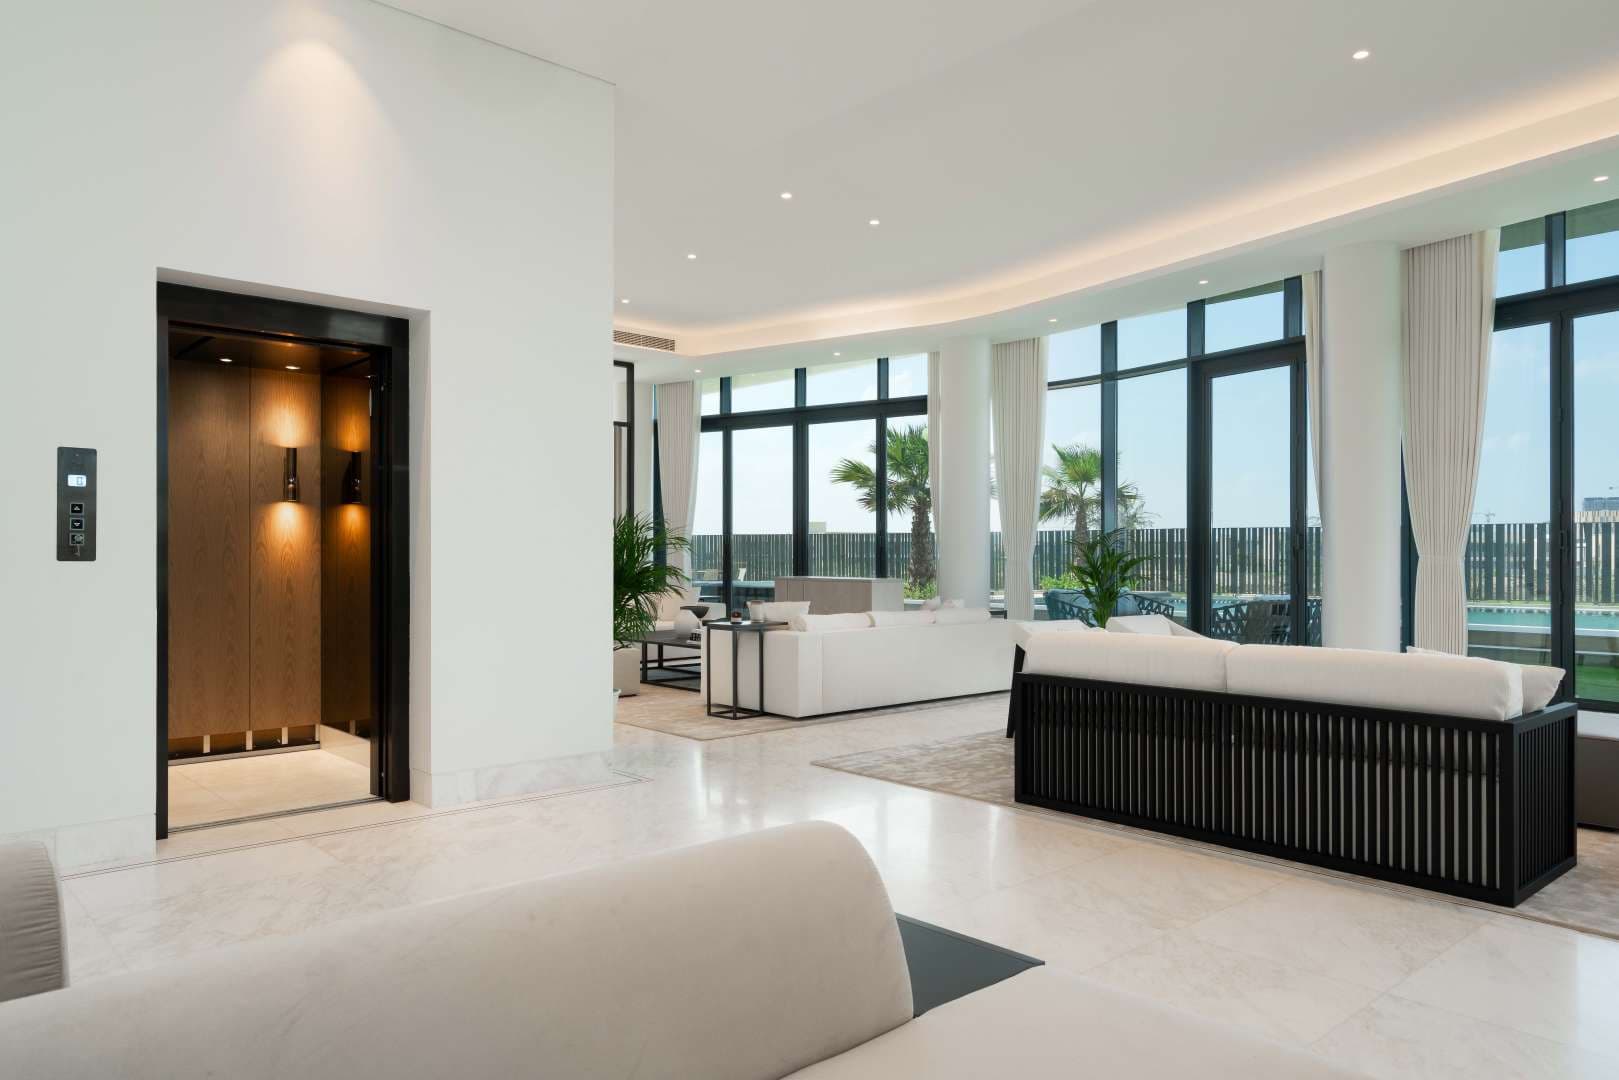 9 Bedroom Villa For Sale Dubai Hills View Lp05164 1acad78110921c00.jpg